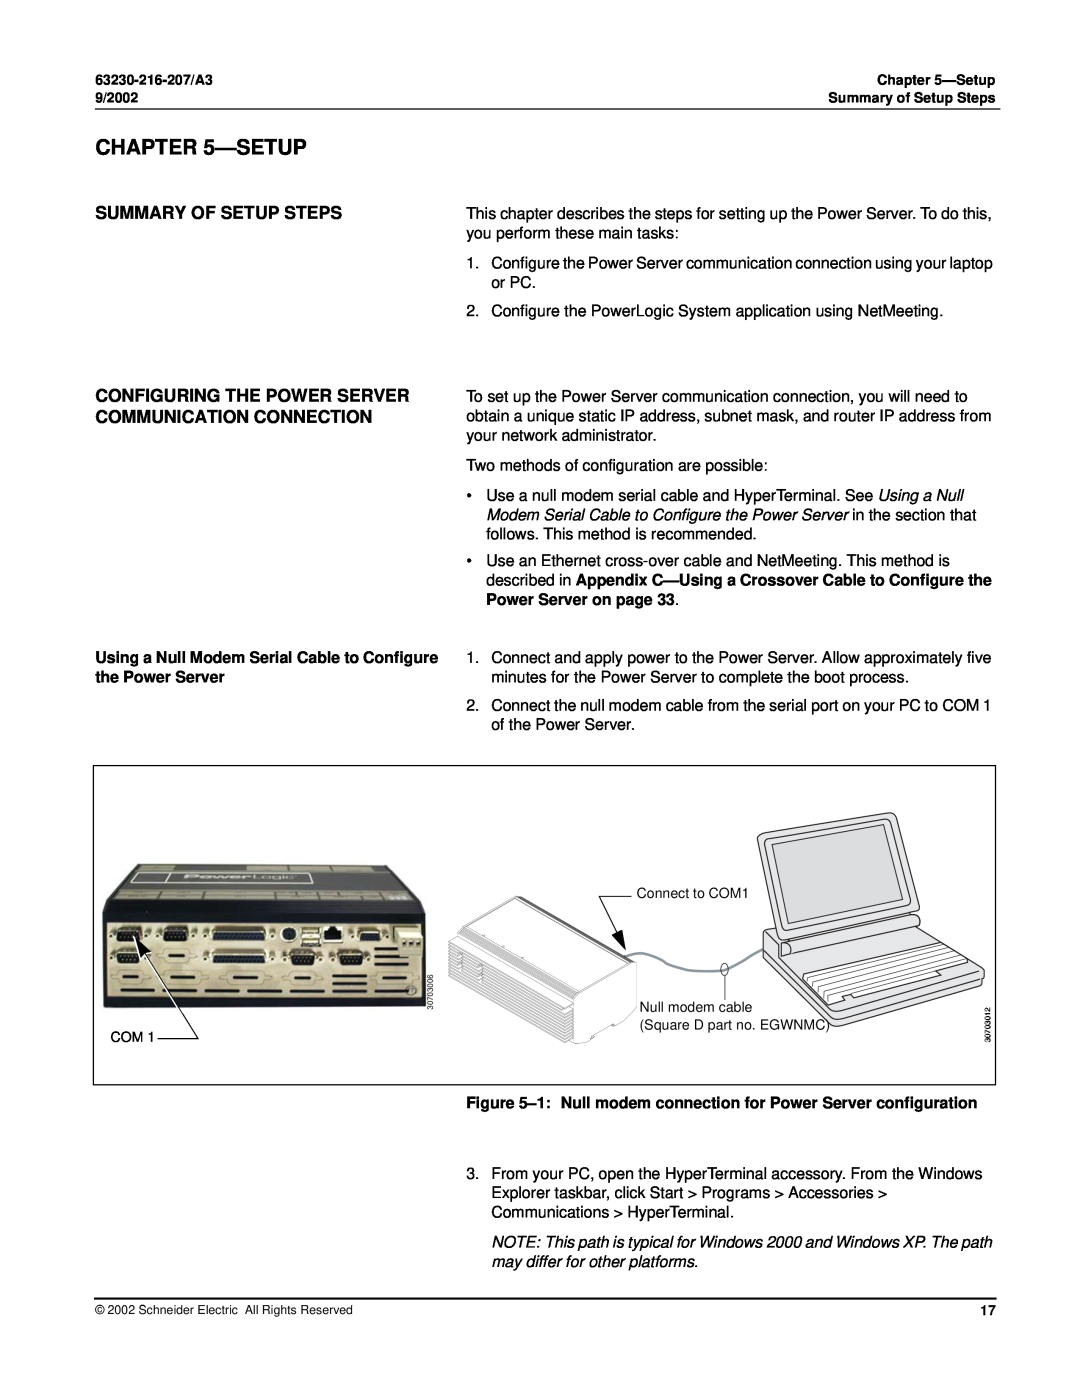 Schneider Electric PWRSRV750, PWRSRV710 Summary Of Setup Steps, you perform these main tasks, or PC, the Power Server 